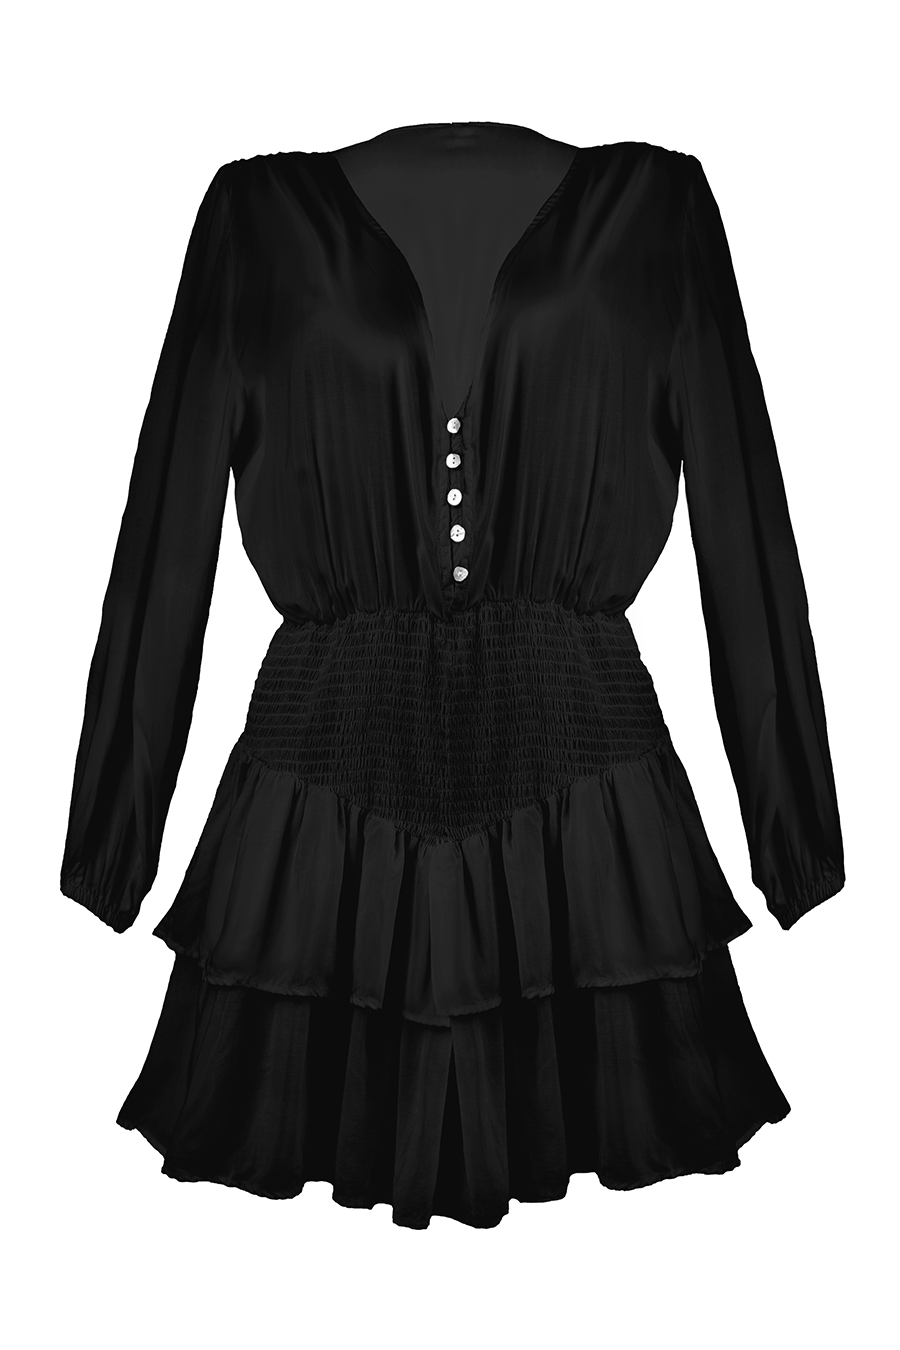 Etnico Black Coverup Dress